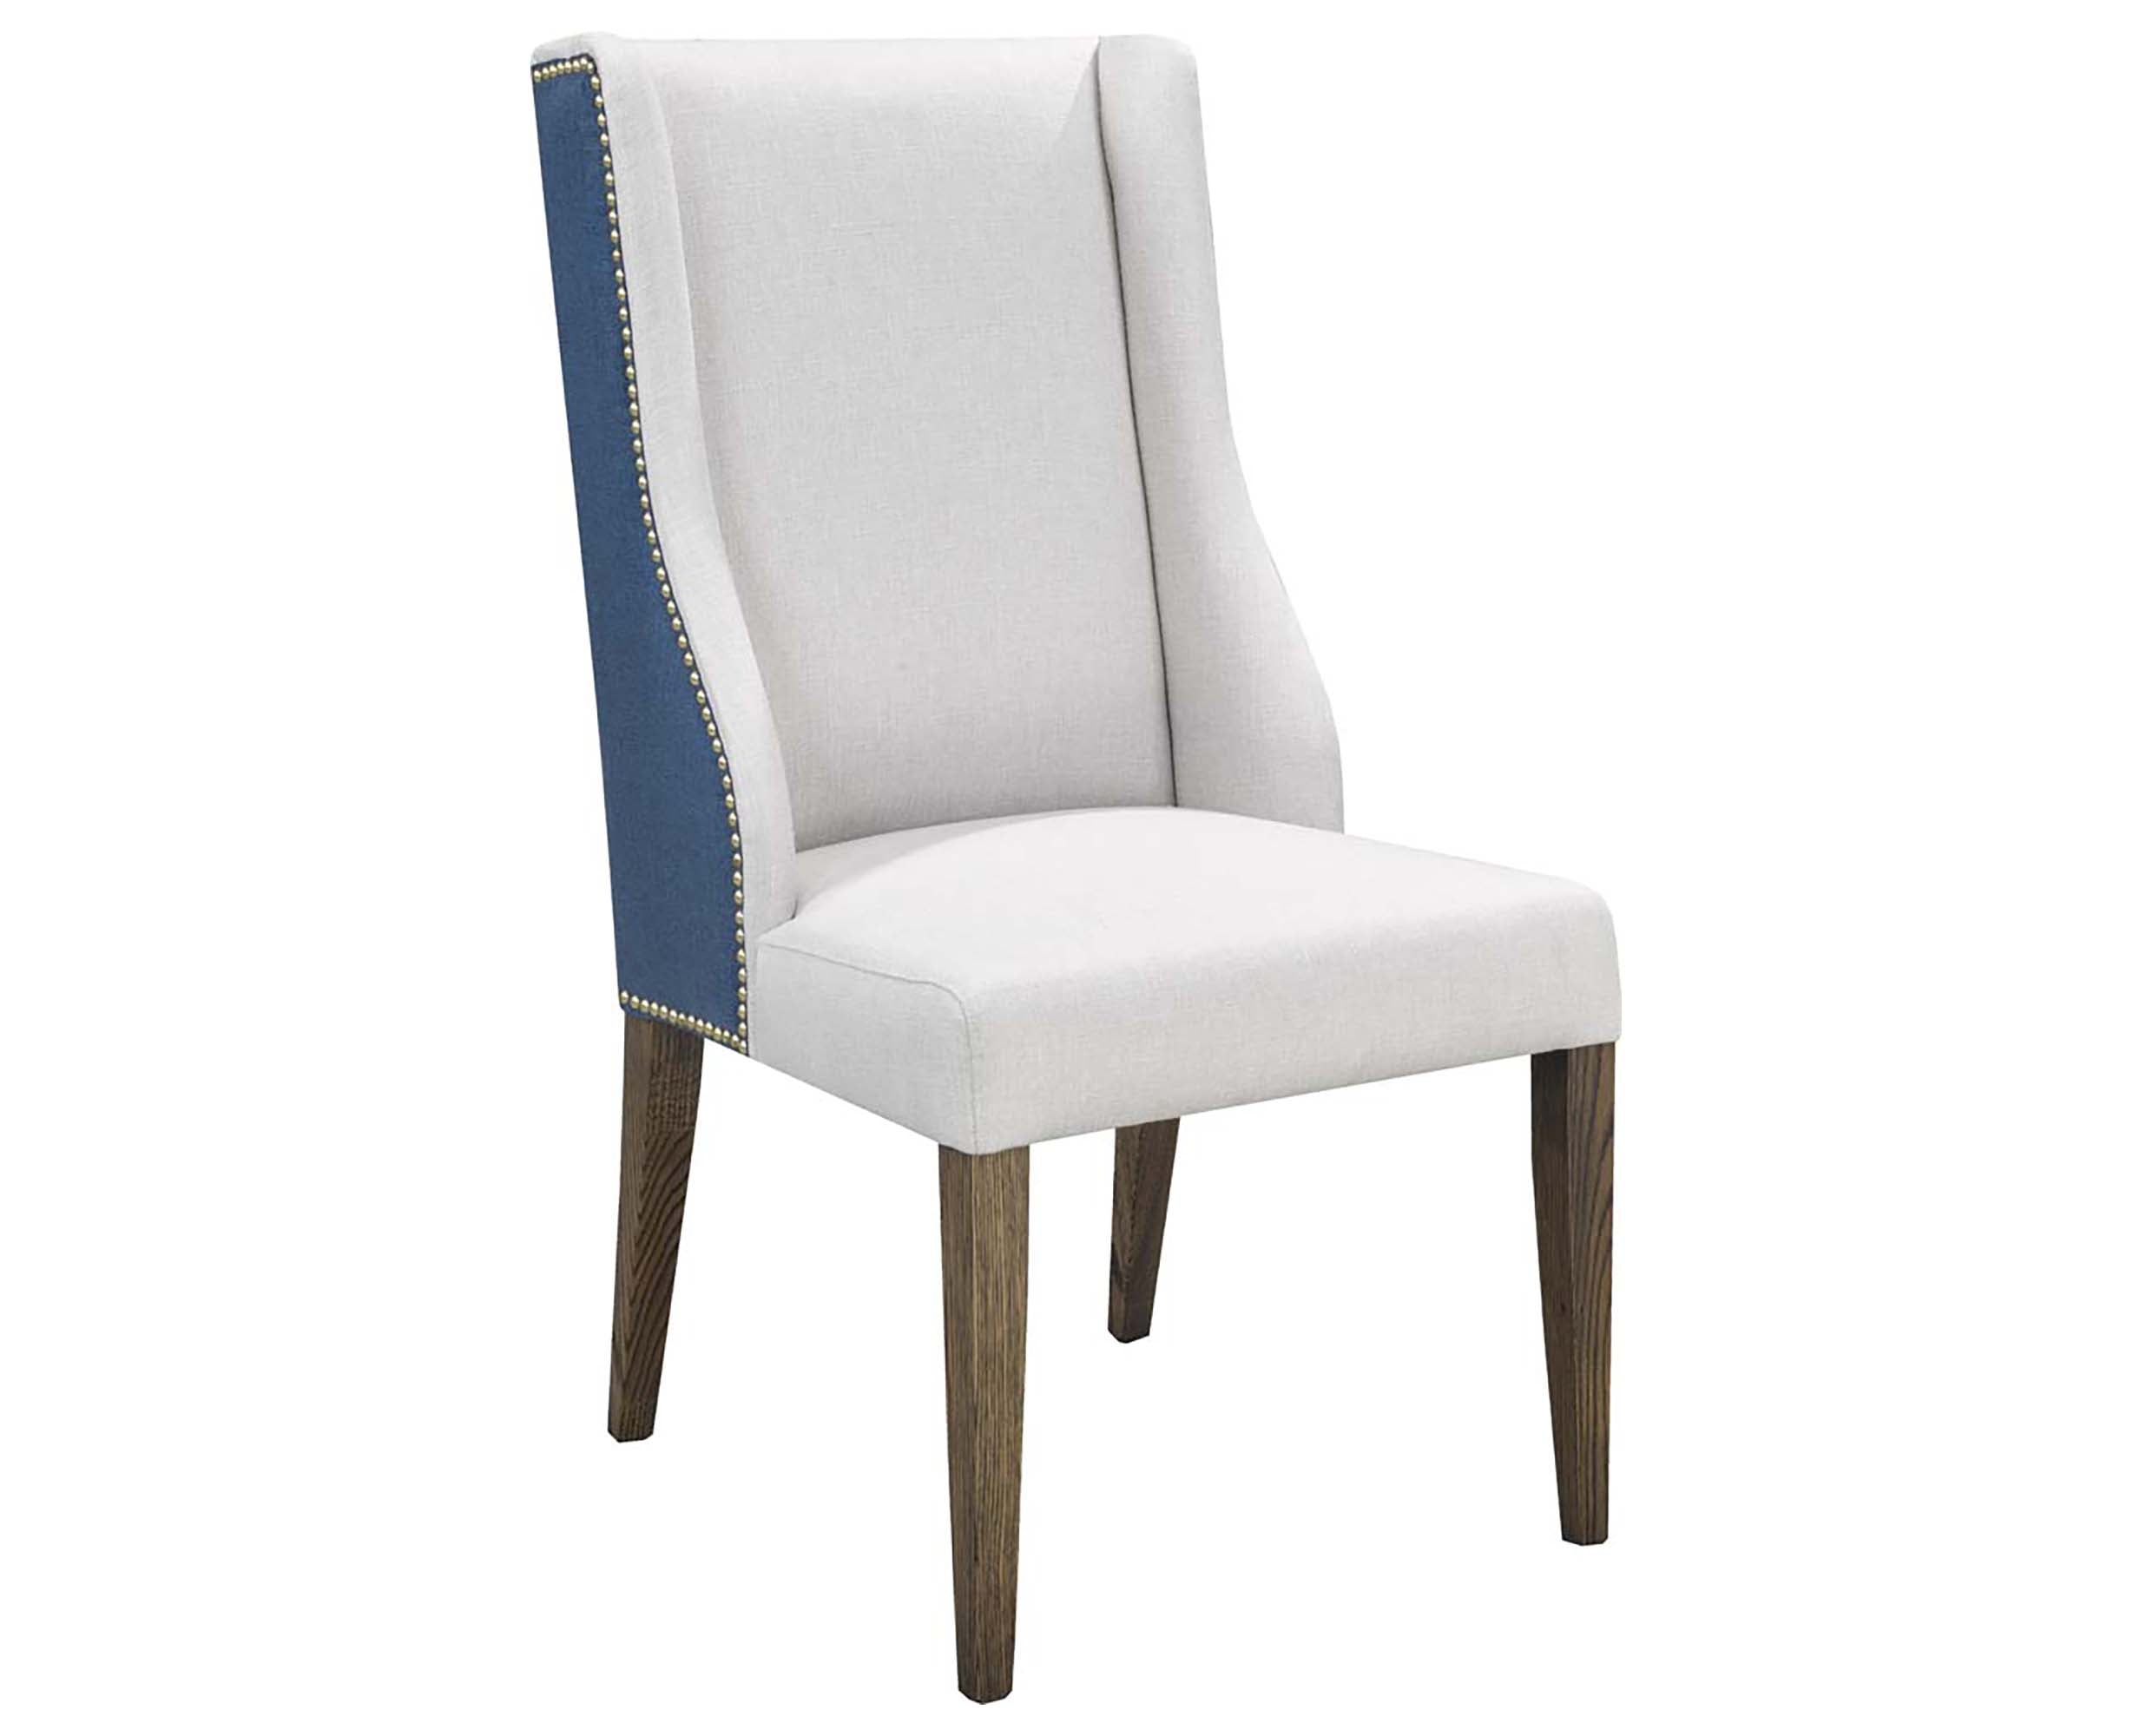 Chair as Shown | Cardinal Woodcraft Nemo Dining Chair | Valley Ridge Furniture